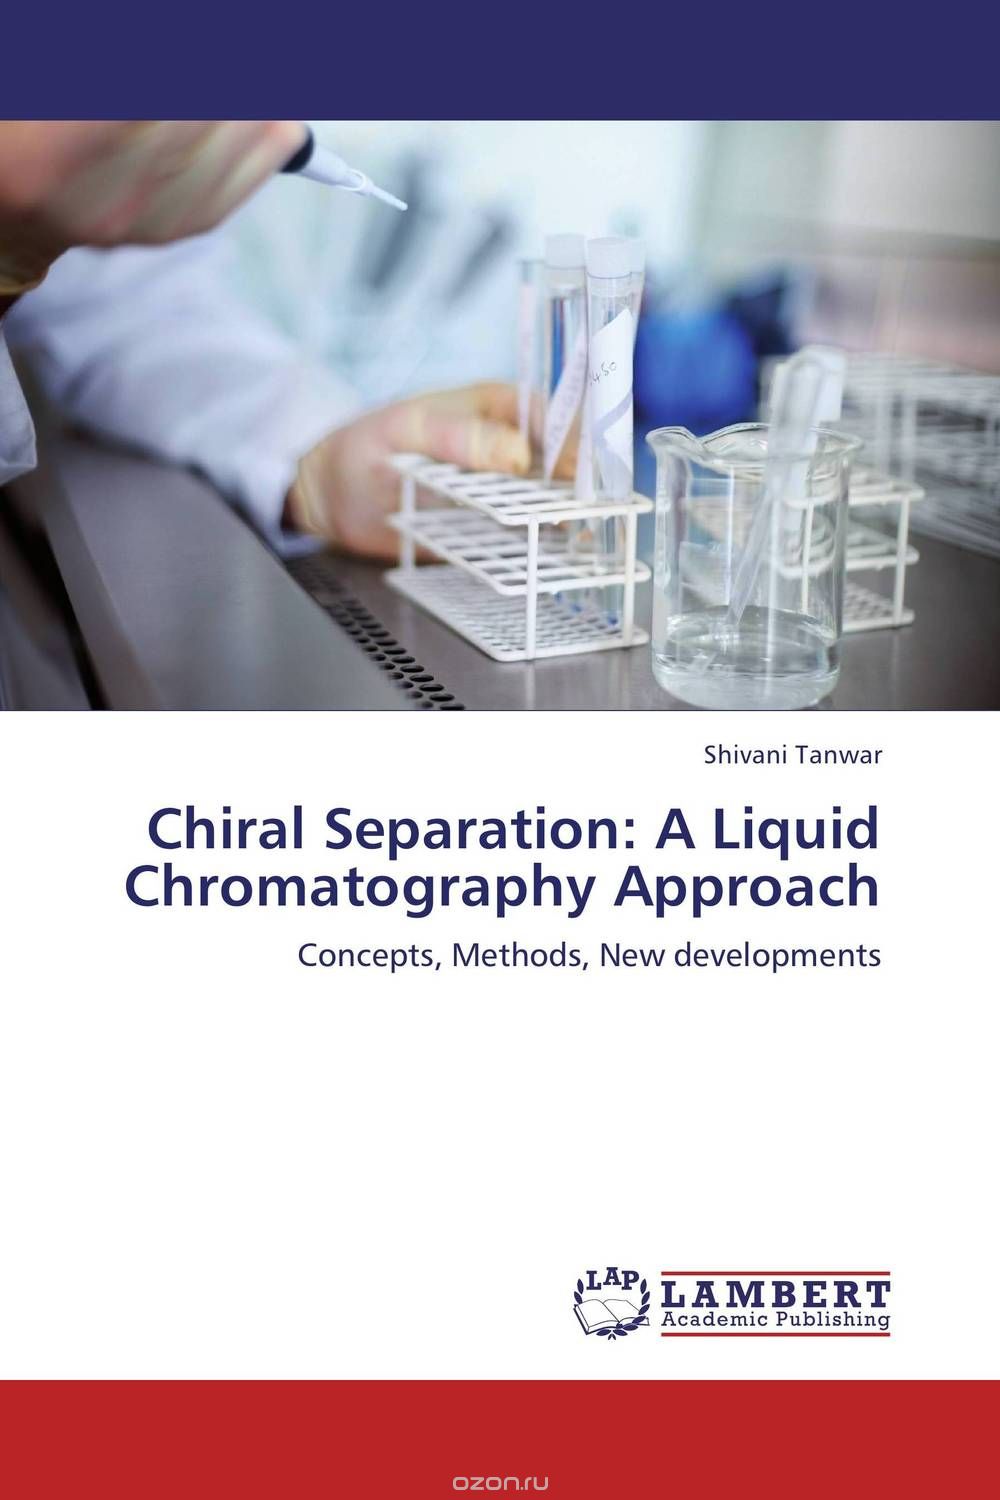 Скачать книгу "Chiral Separation: A Liquid Chromatography Approach"